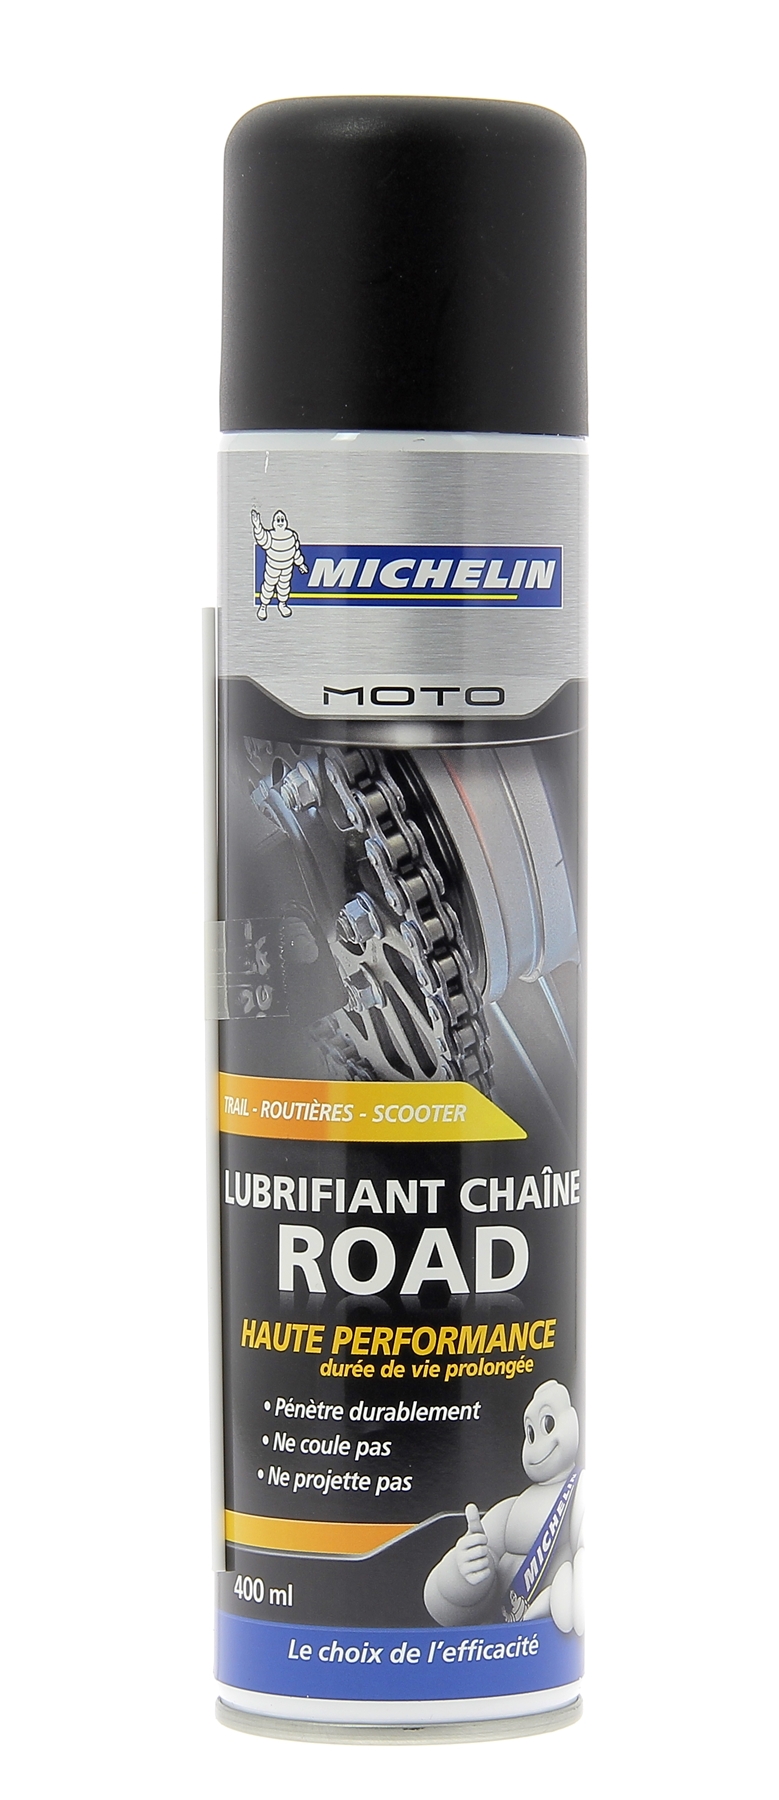 MICHELIN Moto lubrifiant chaîne Road. 400ml – Etape Auto